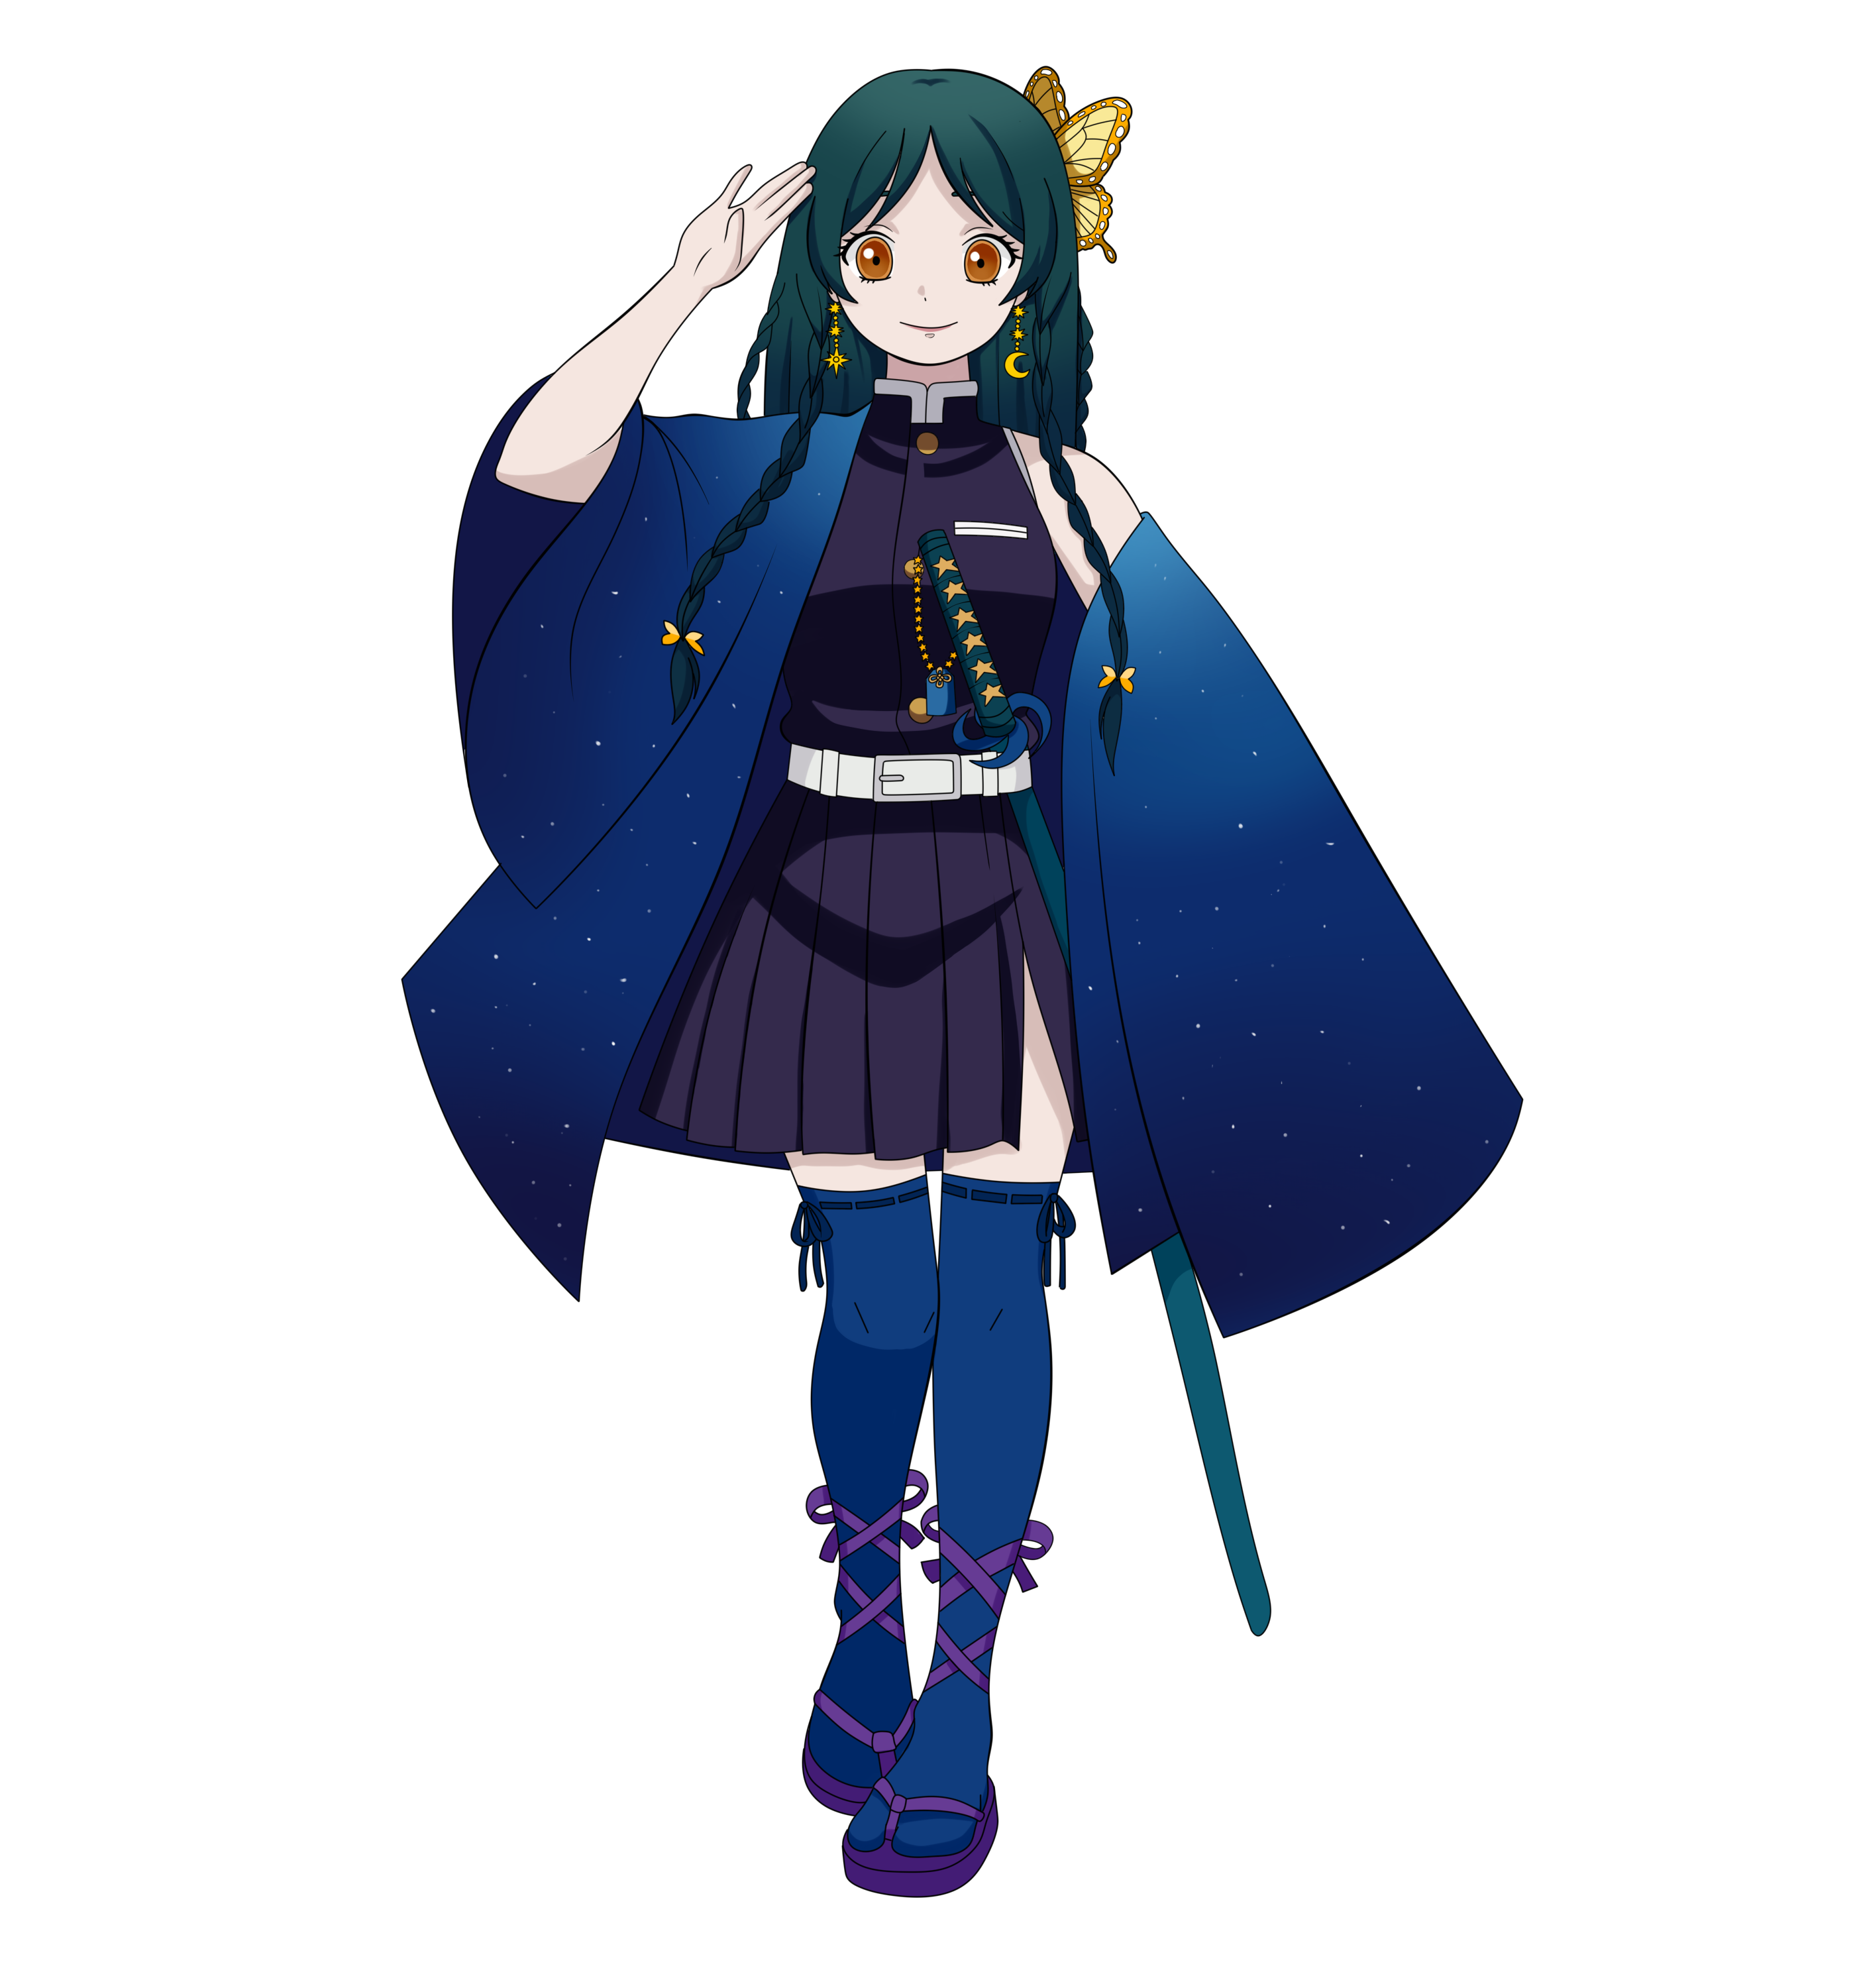 Category:Female Characters, Kimetsu no Yaiba Wiki